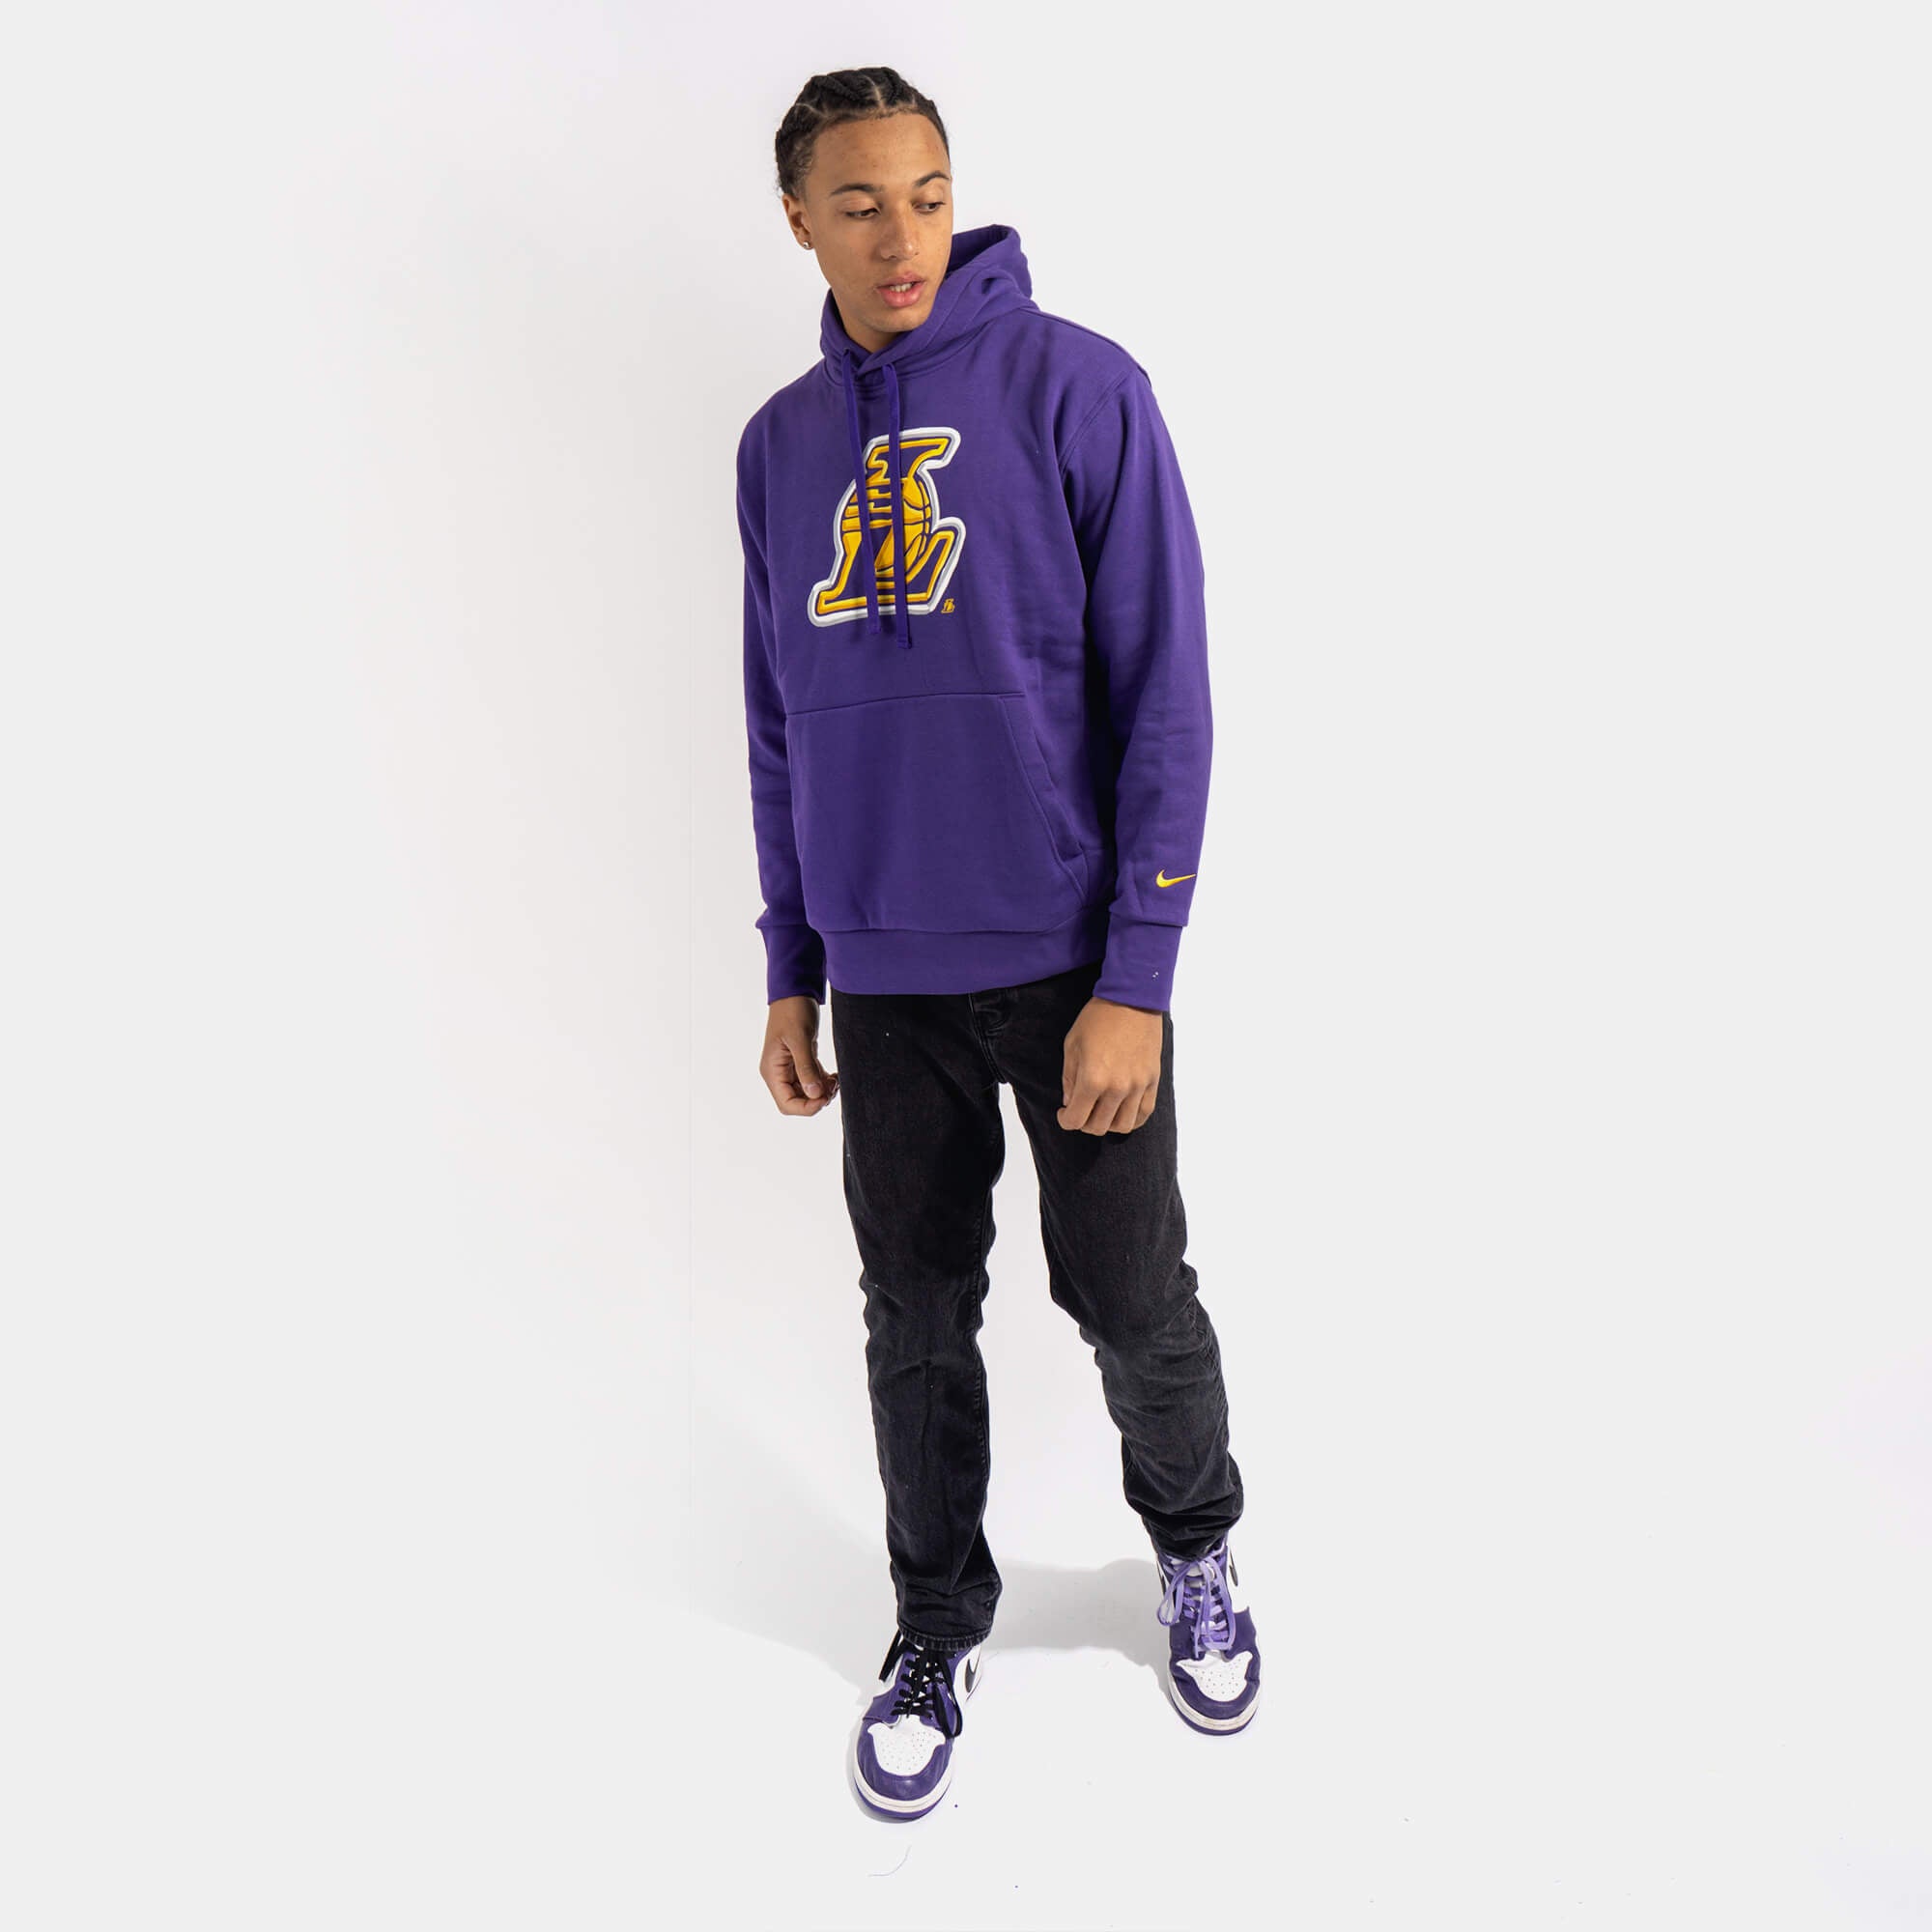 Los Angeles Lakers Courtside Men's Nike NBA T-Shirt - Black - 50% Organic Cotton